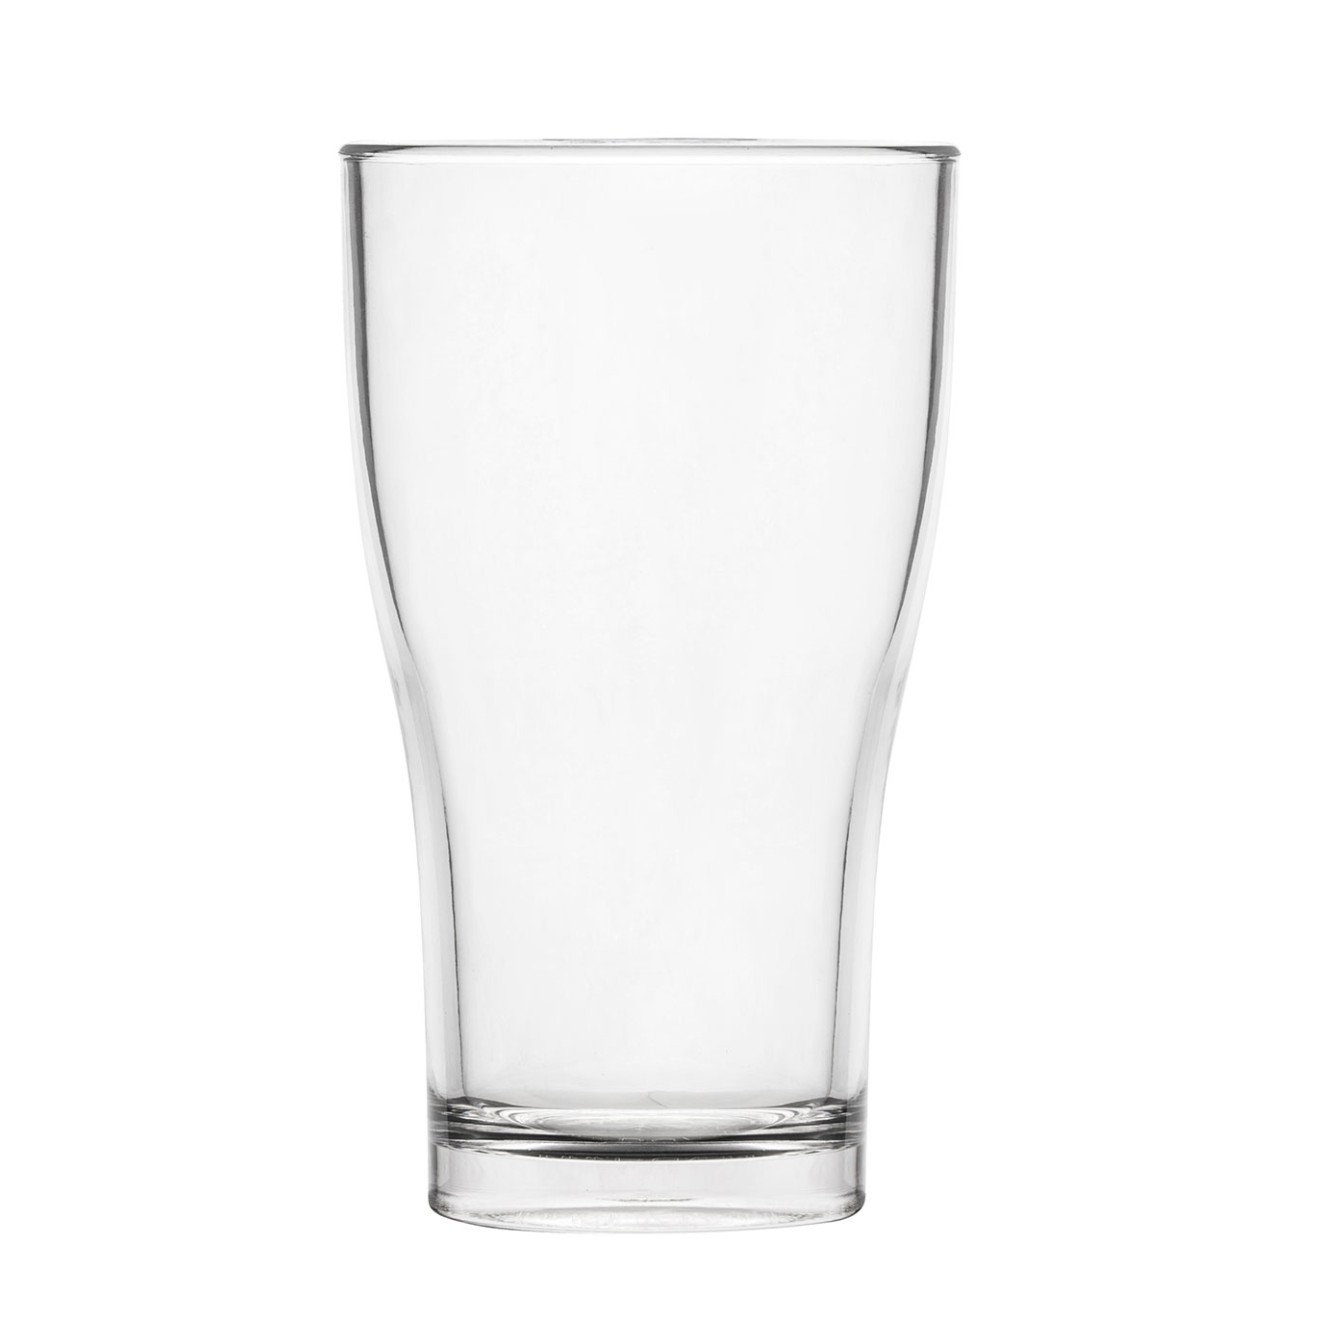 10 Stück Weizenbierglas 0,5l aus Kunststoff in Glasoptik